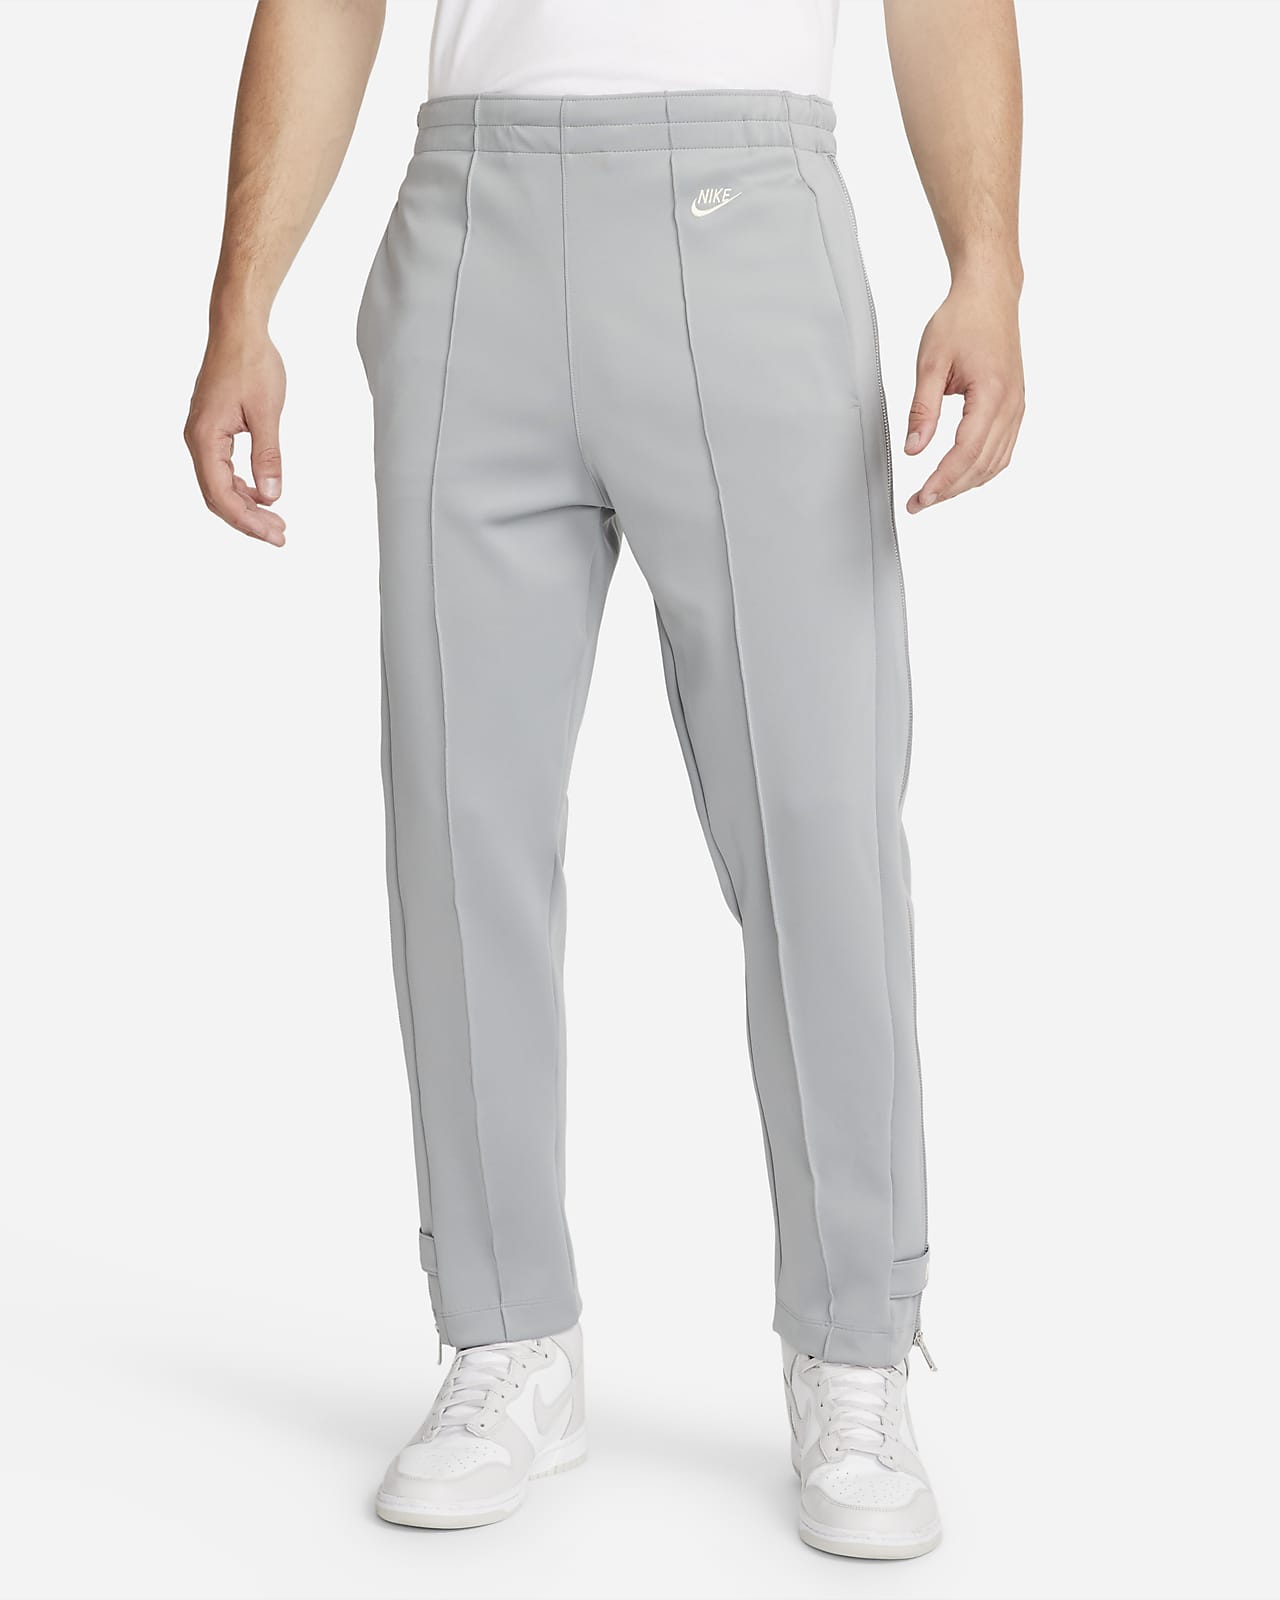 Nike Sportswear Circa Men's Trousers